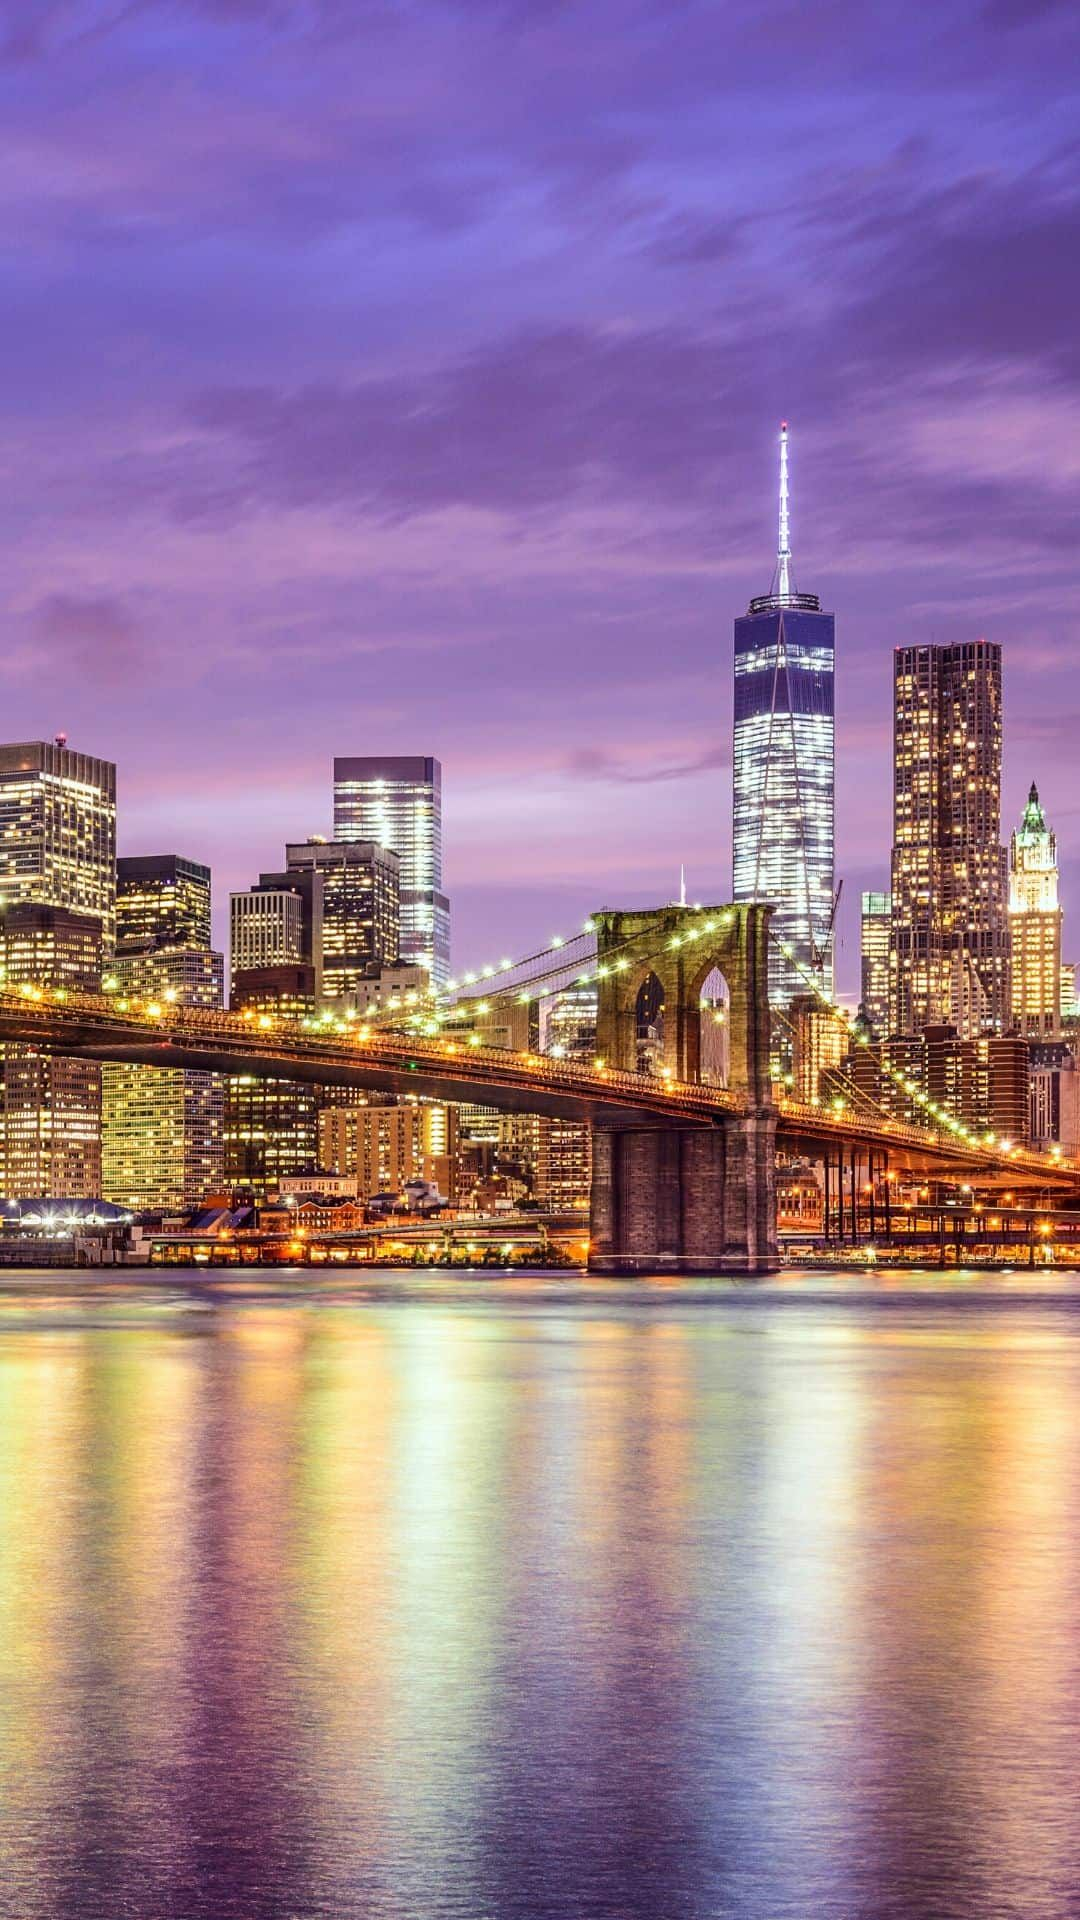 1080x1920 New York Skyline Wallpaper for iPhone | New york wallpaper, New york city vacation, New york painting